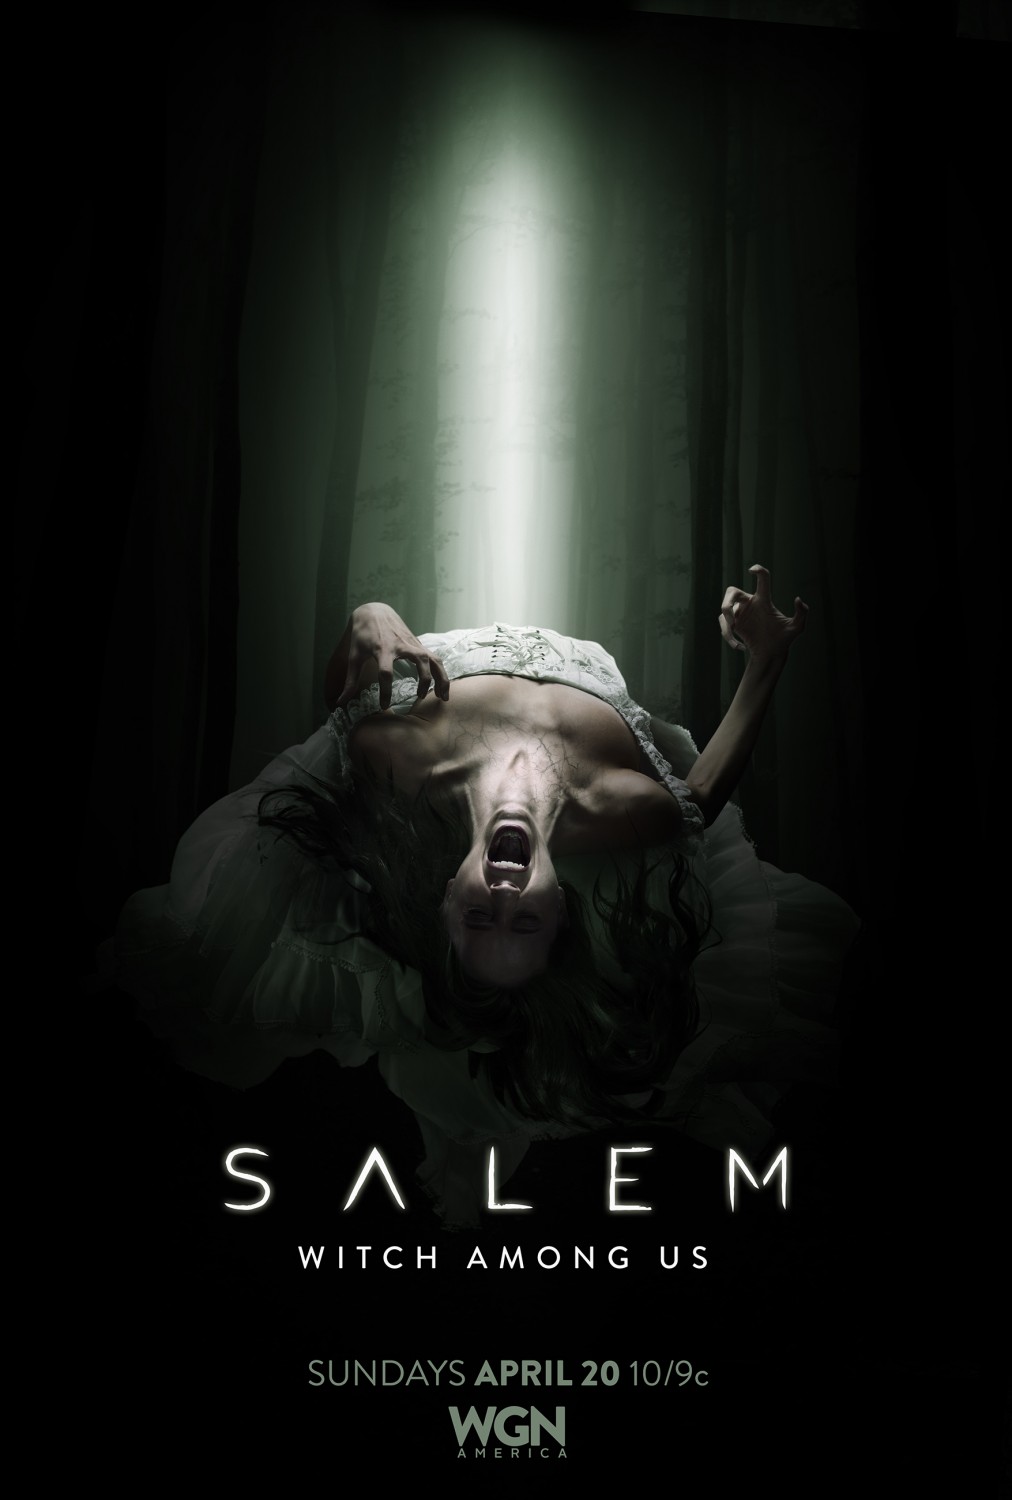 Extra Large TV Poster Image for Salem (#5 of 12)